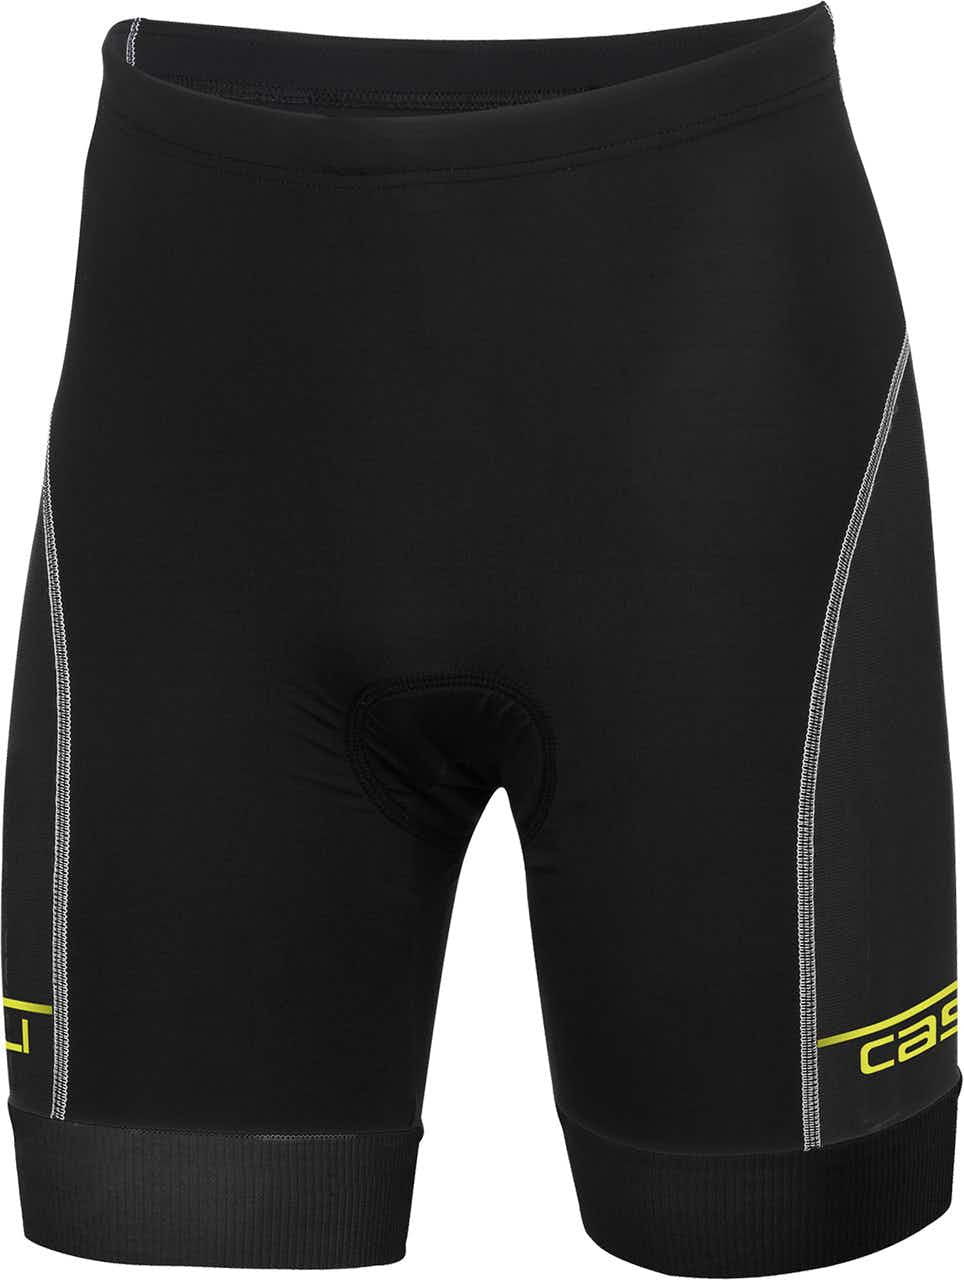 Free Tri Shorts Black/Yellow Fluo